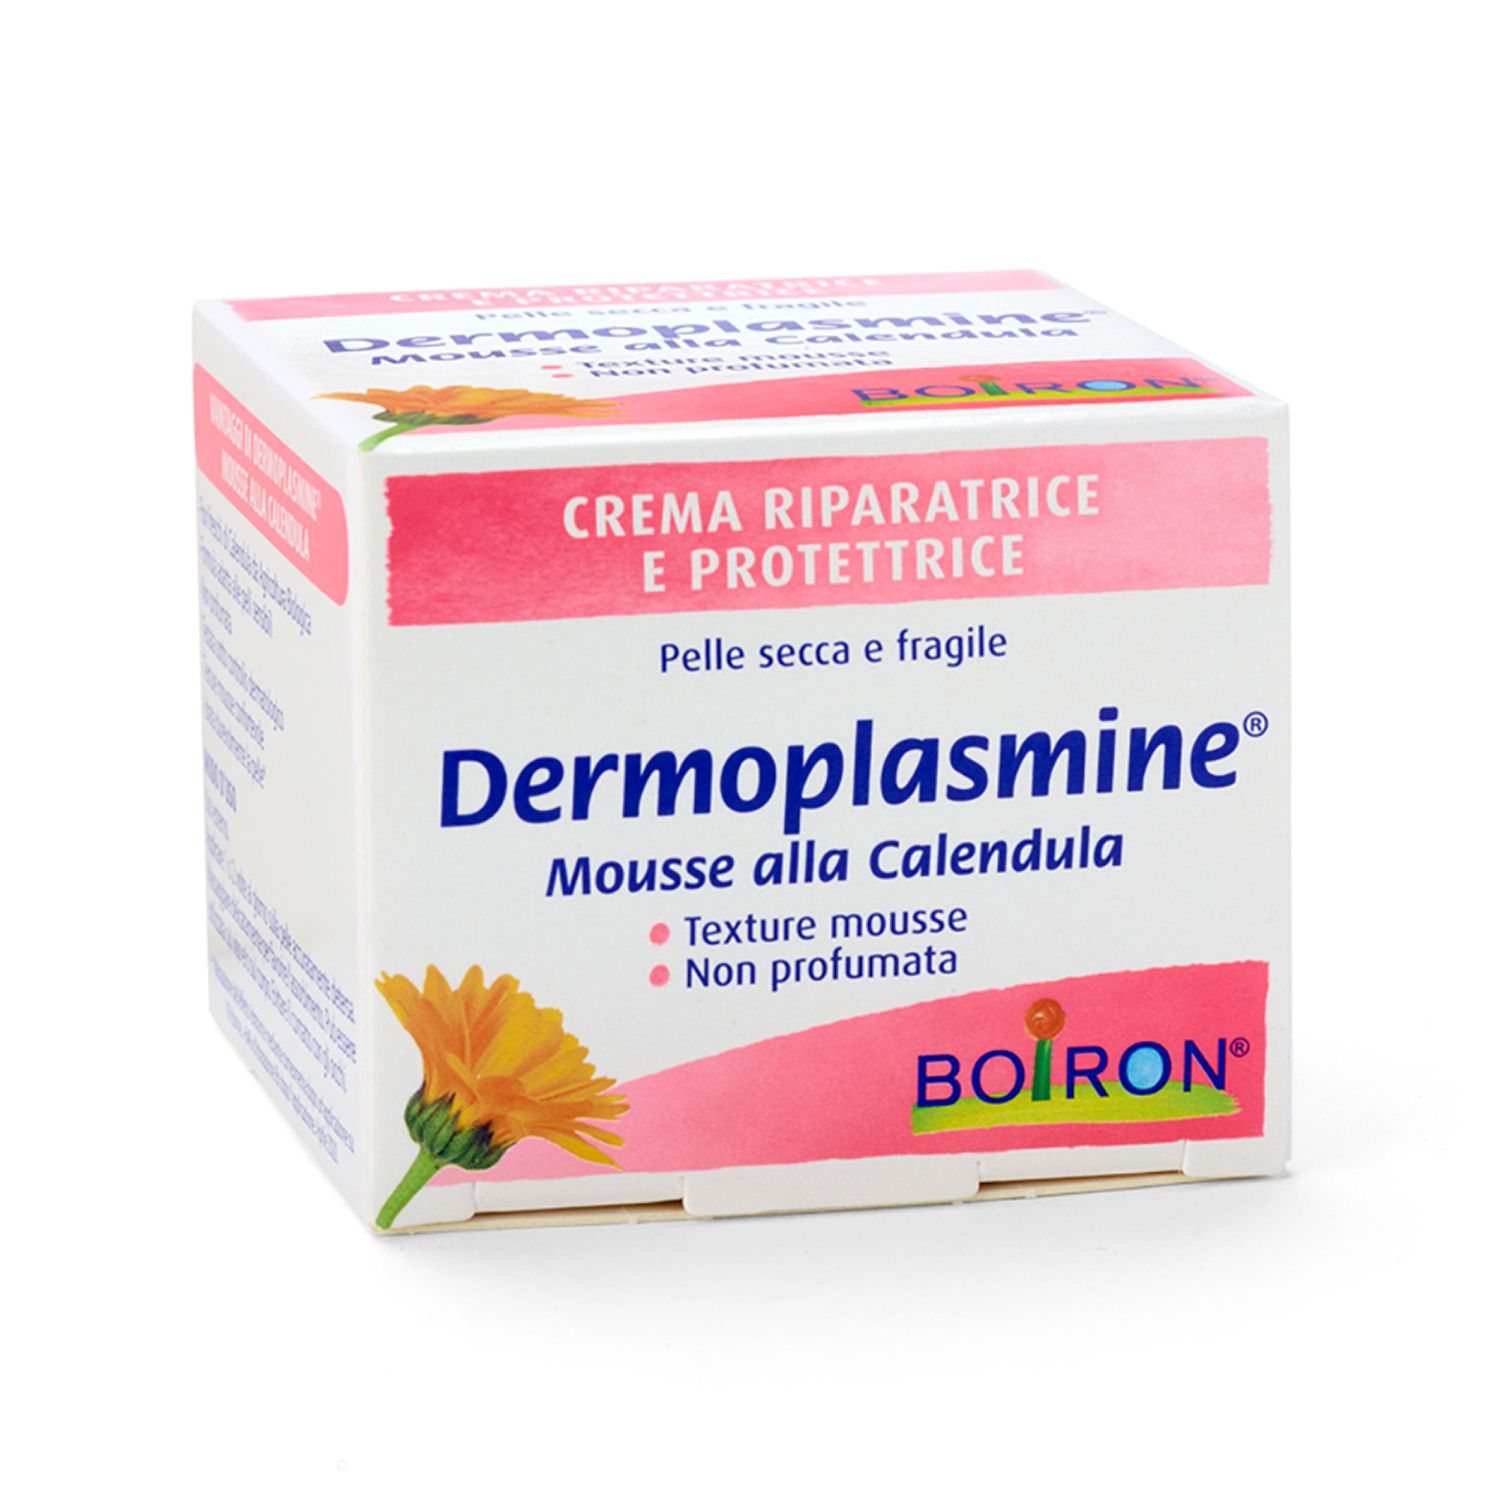 BOIRON® DERMOPLASMINE® Mousse alla Calendula + Balsamo Labbra GRATIS